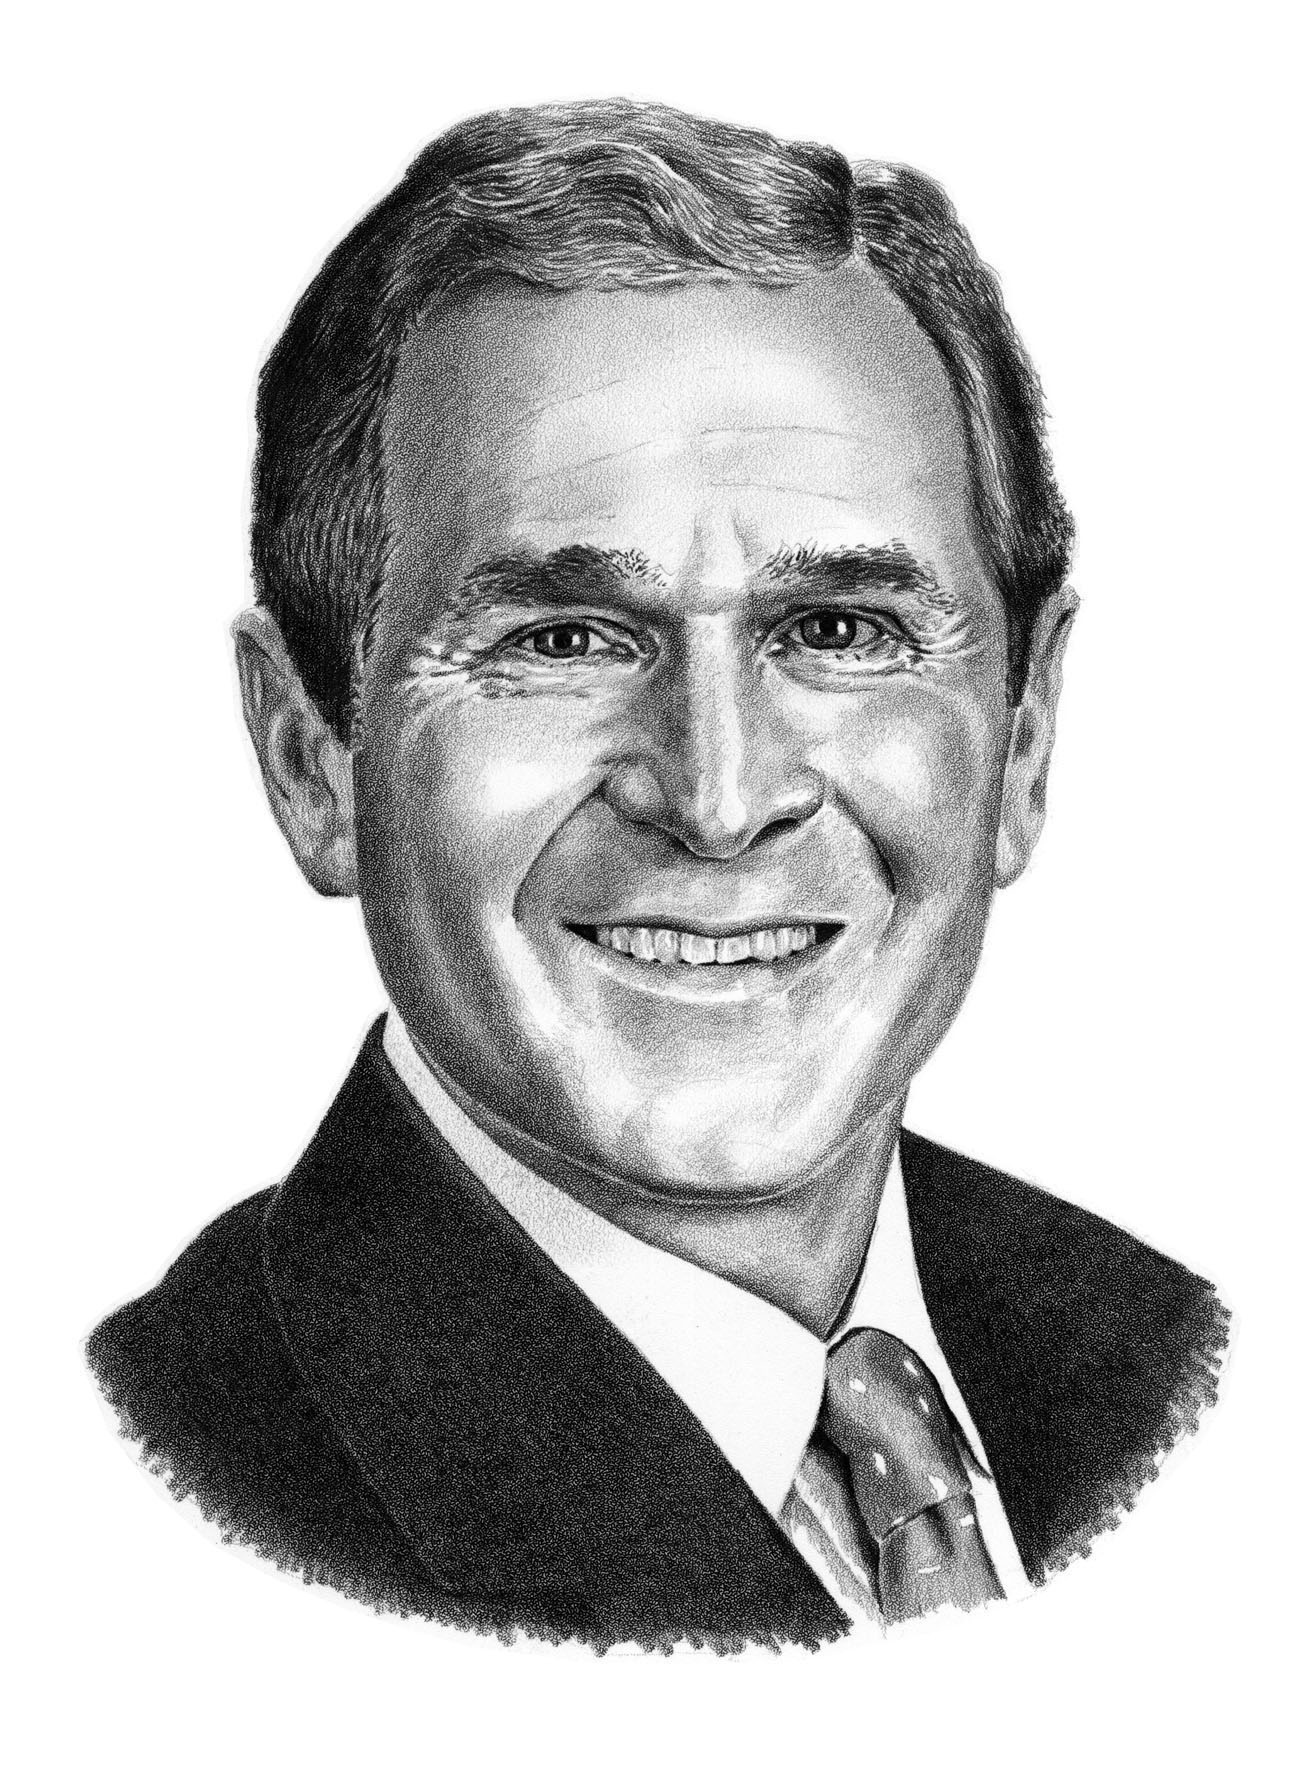 Bush Sketch at Explore collection of